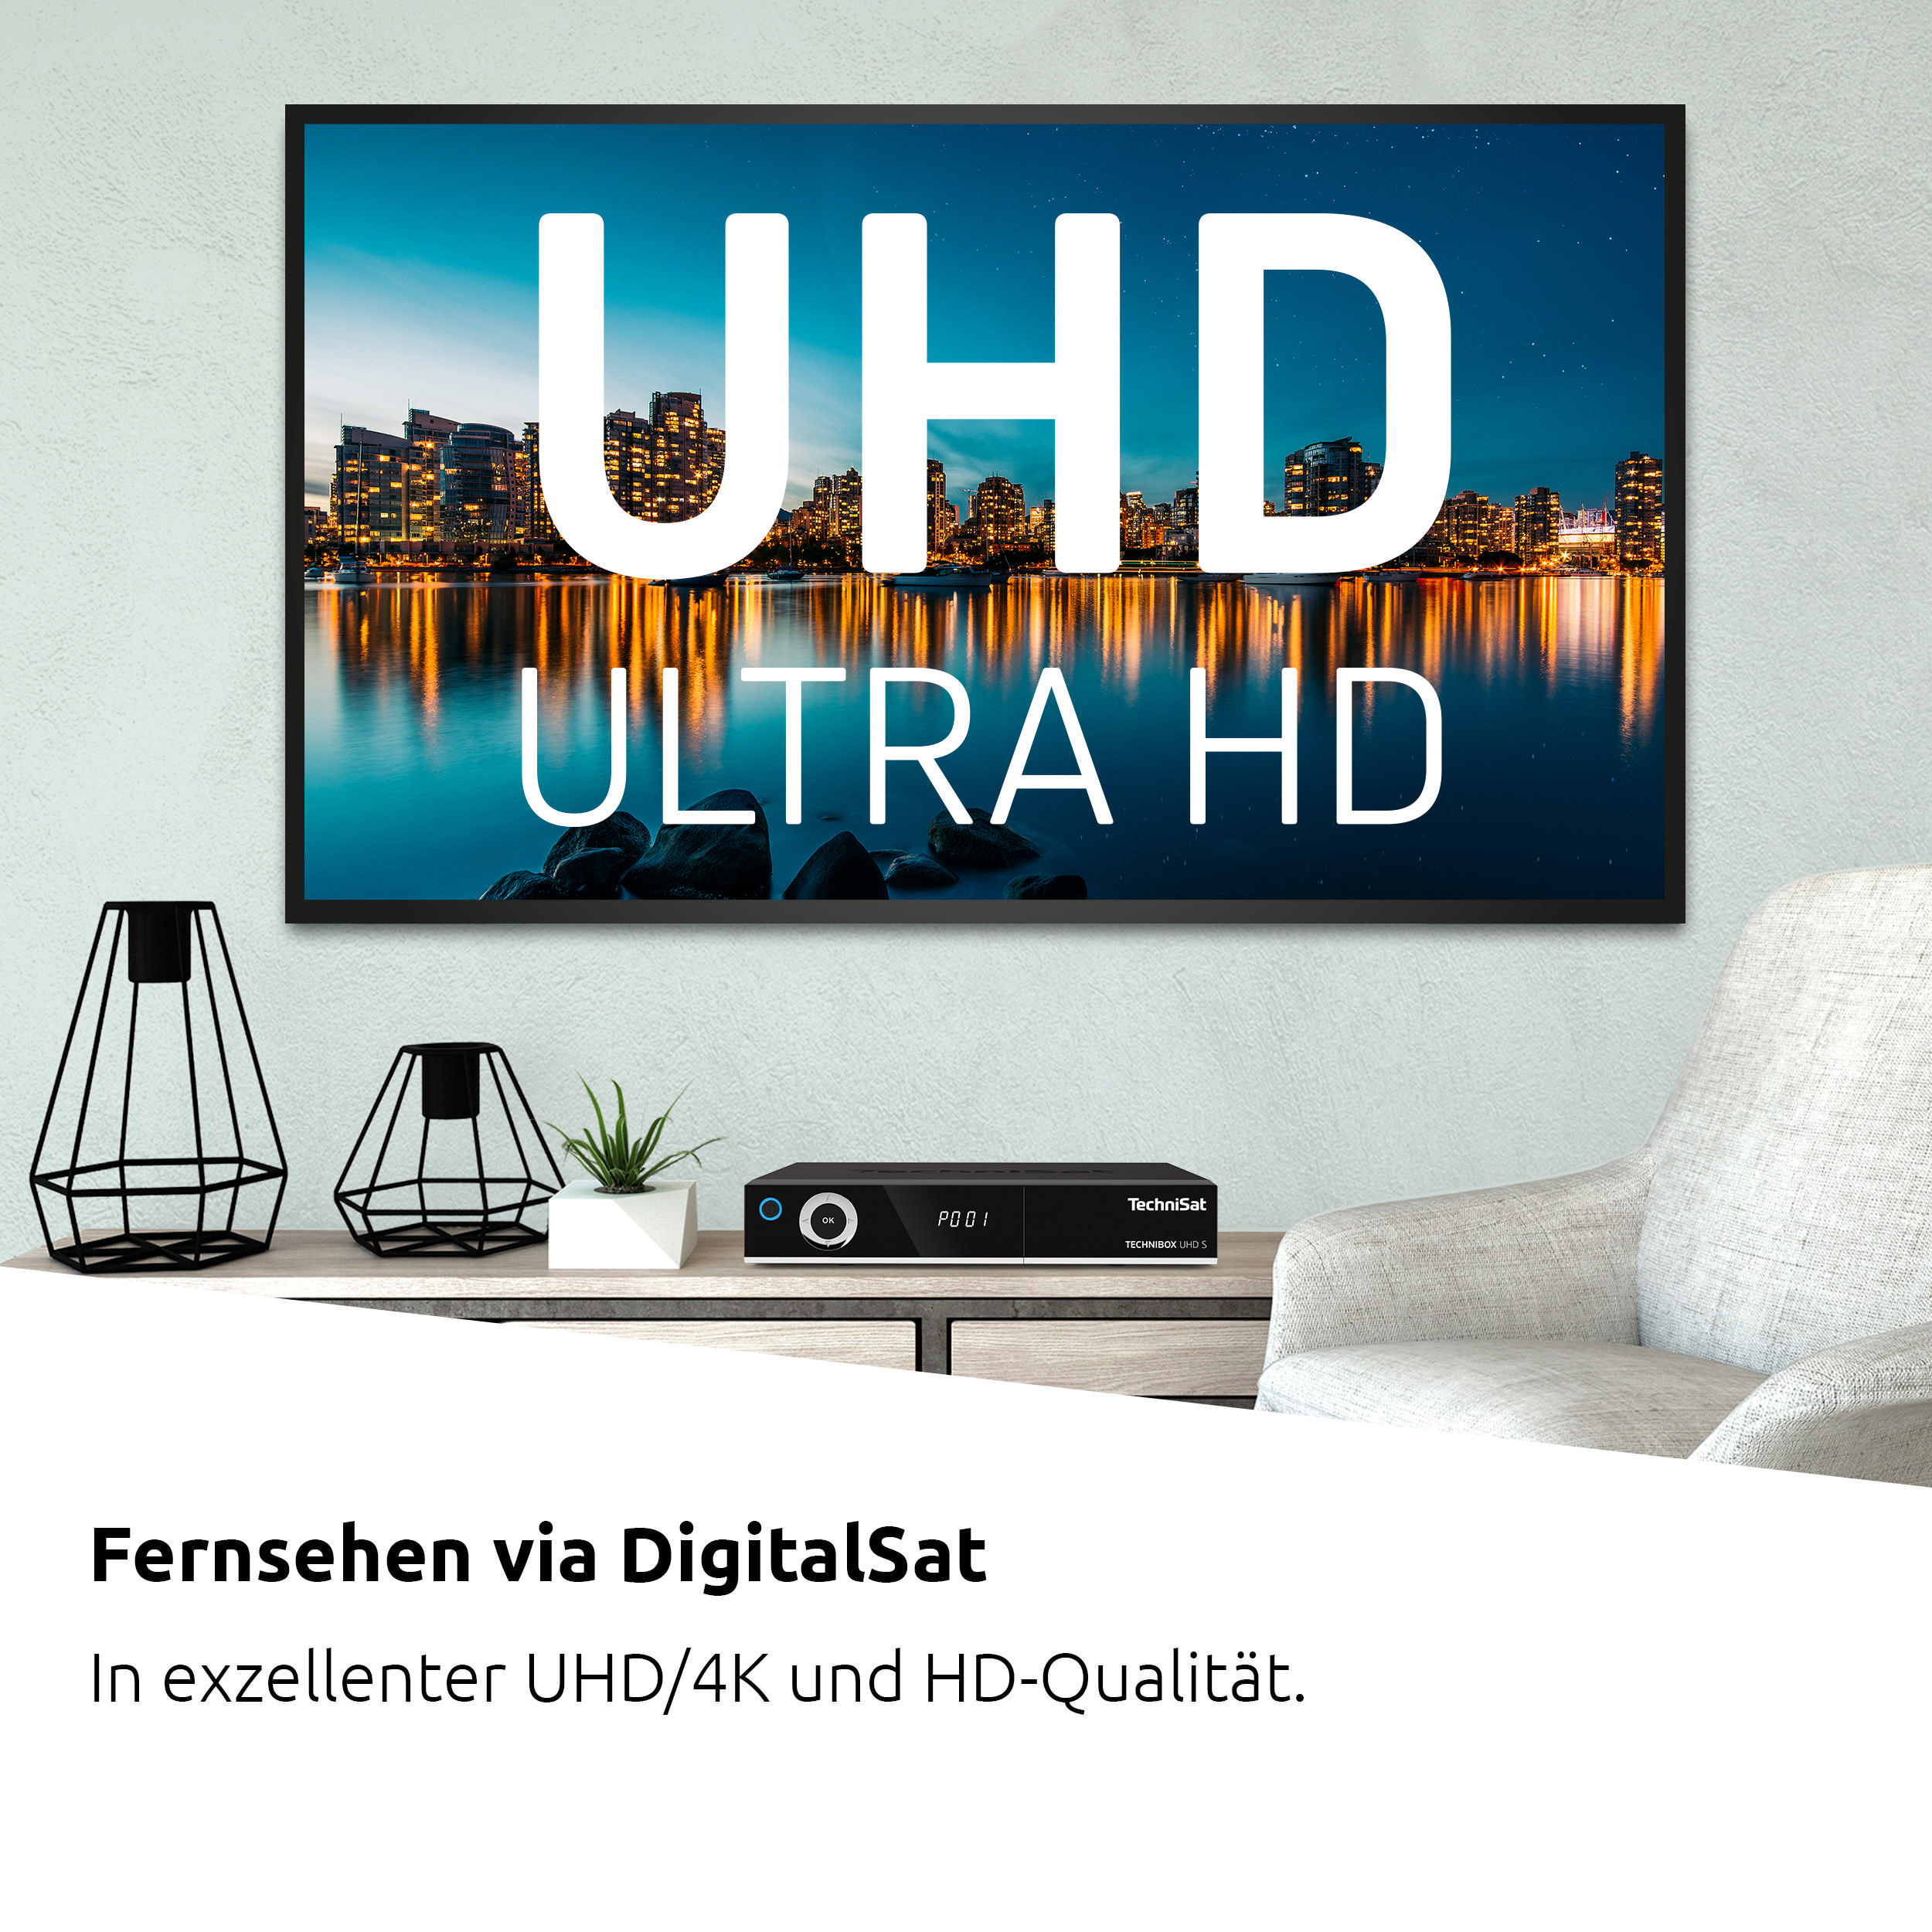 TECHNIBOX S TECHNISAT DVB-S, Twin Tuner, DVB-S2, Schwarz) UHD Receiver (PVR-Funktion,